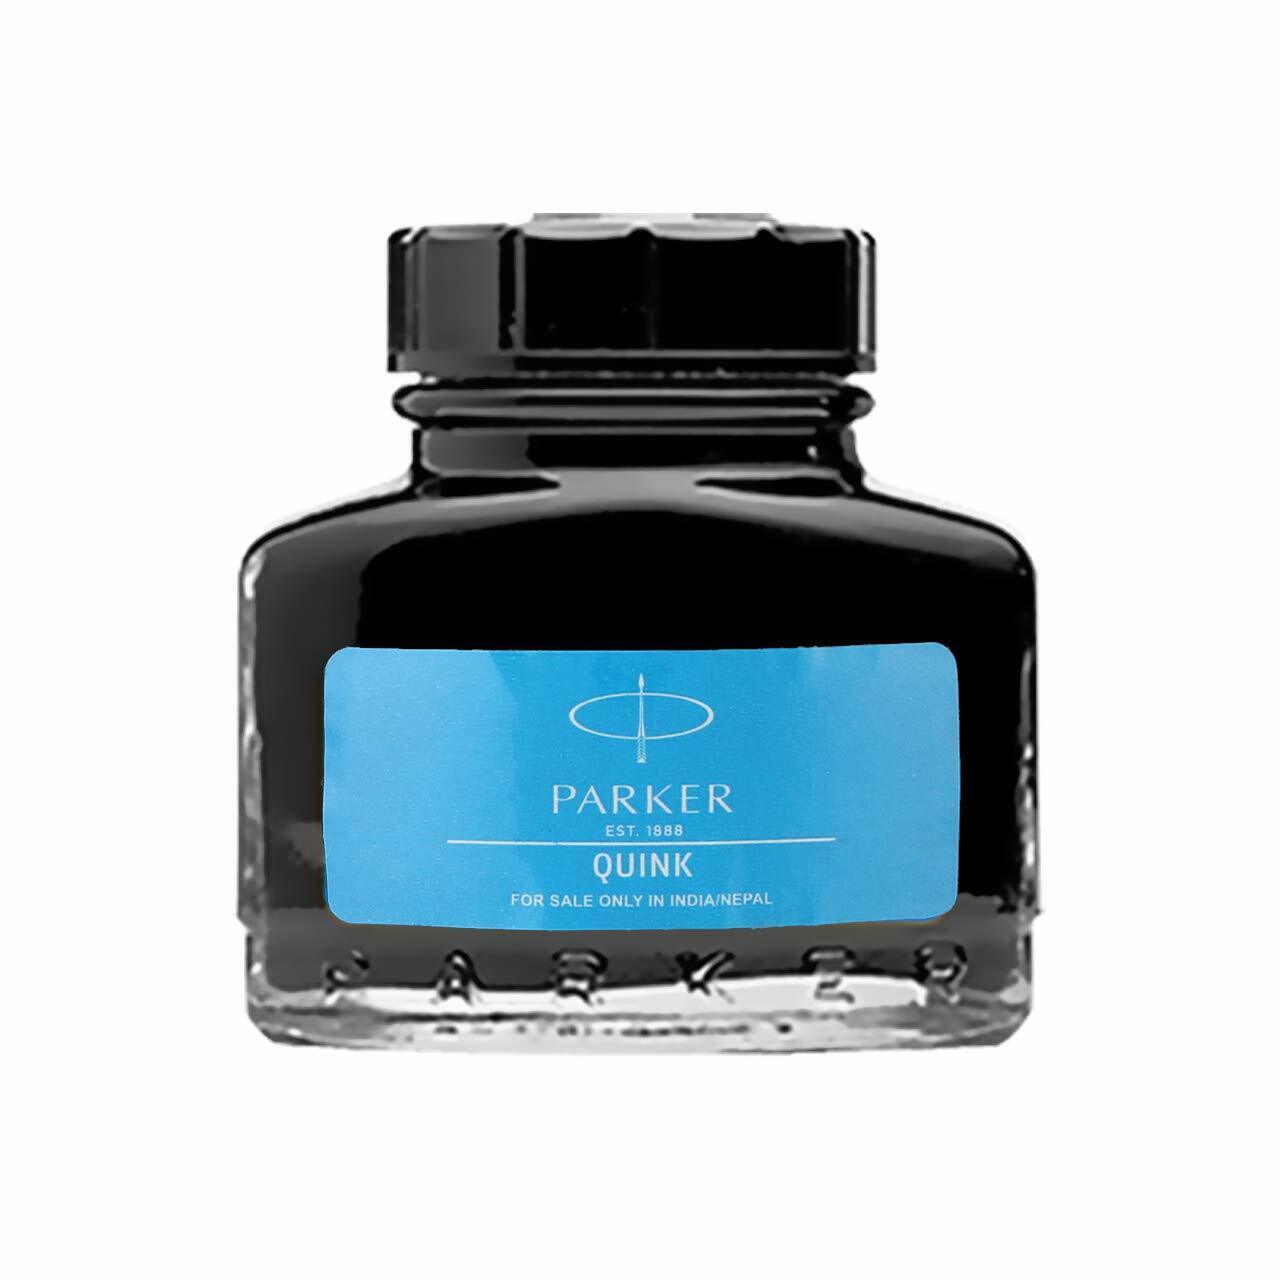 PARKER QUINK PEN INK BLUE BOTTLE 30ML FROM INDIA 